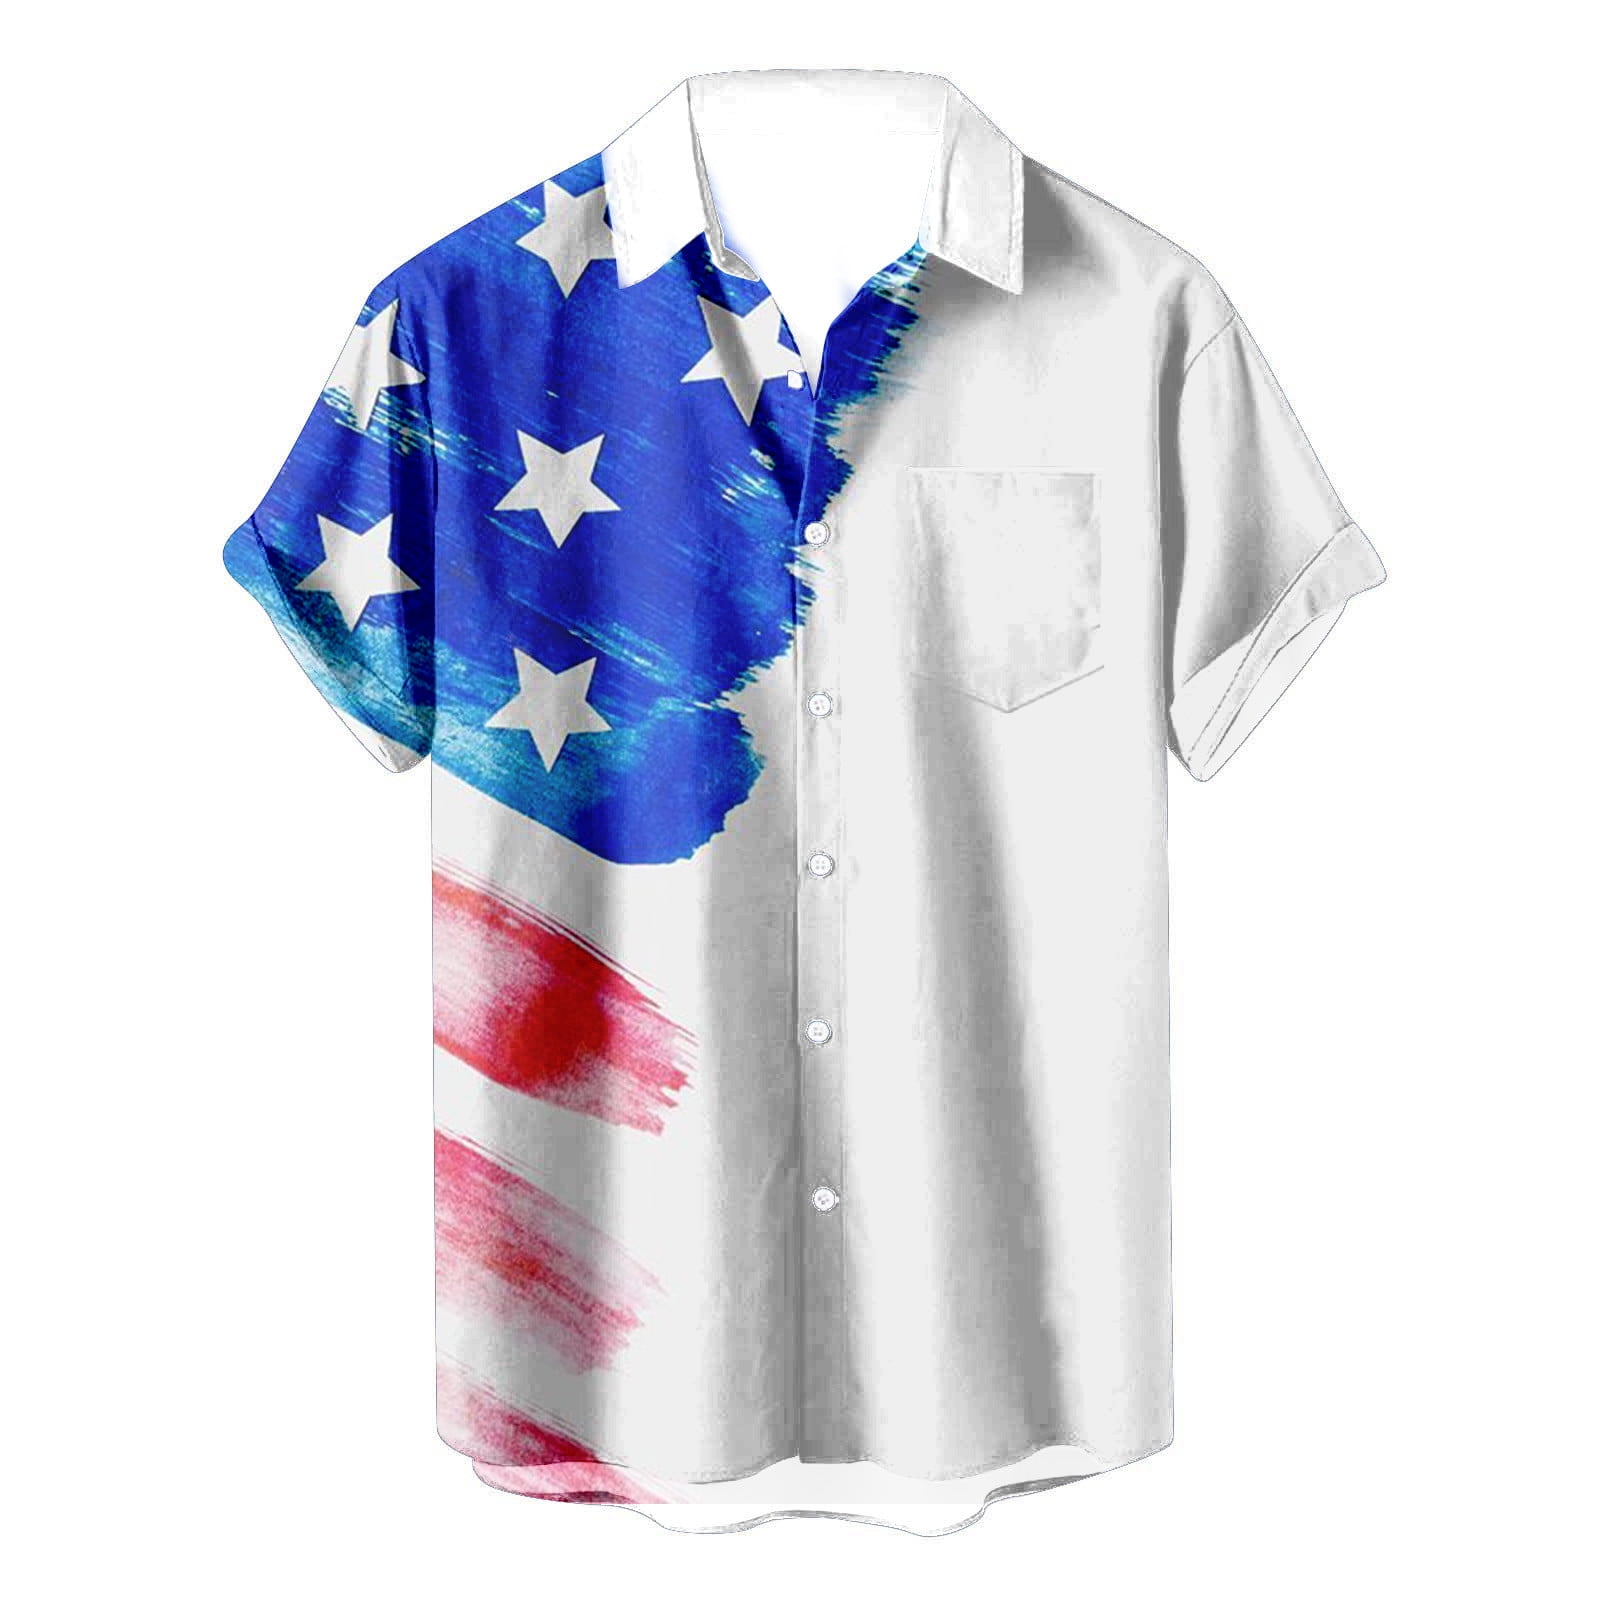 QIPOPIQ Clearance Men's Shirts 4th of July American Tees Turn-down